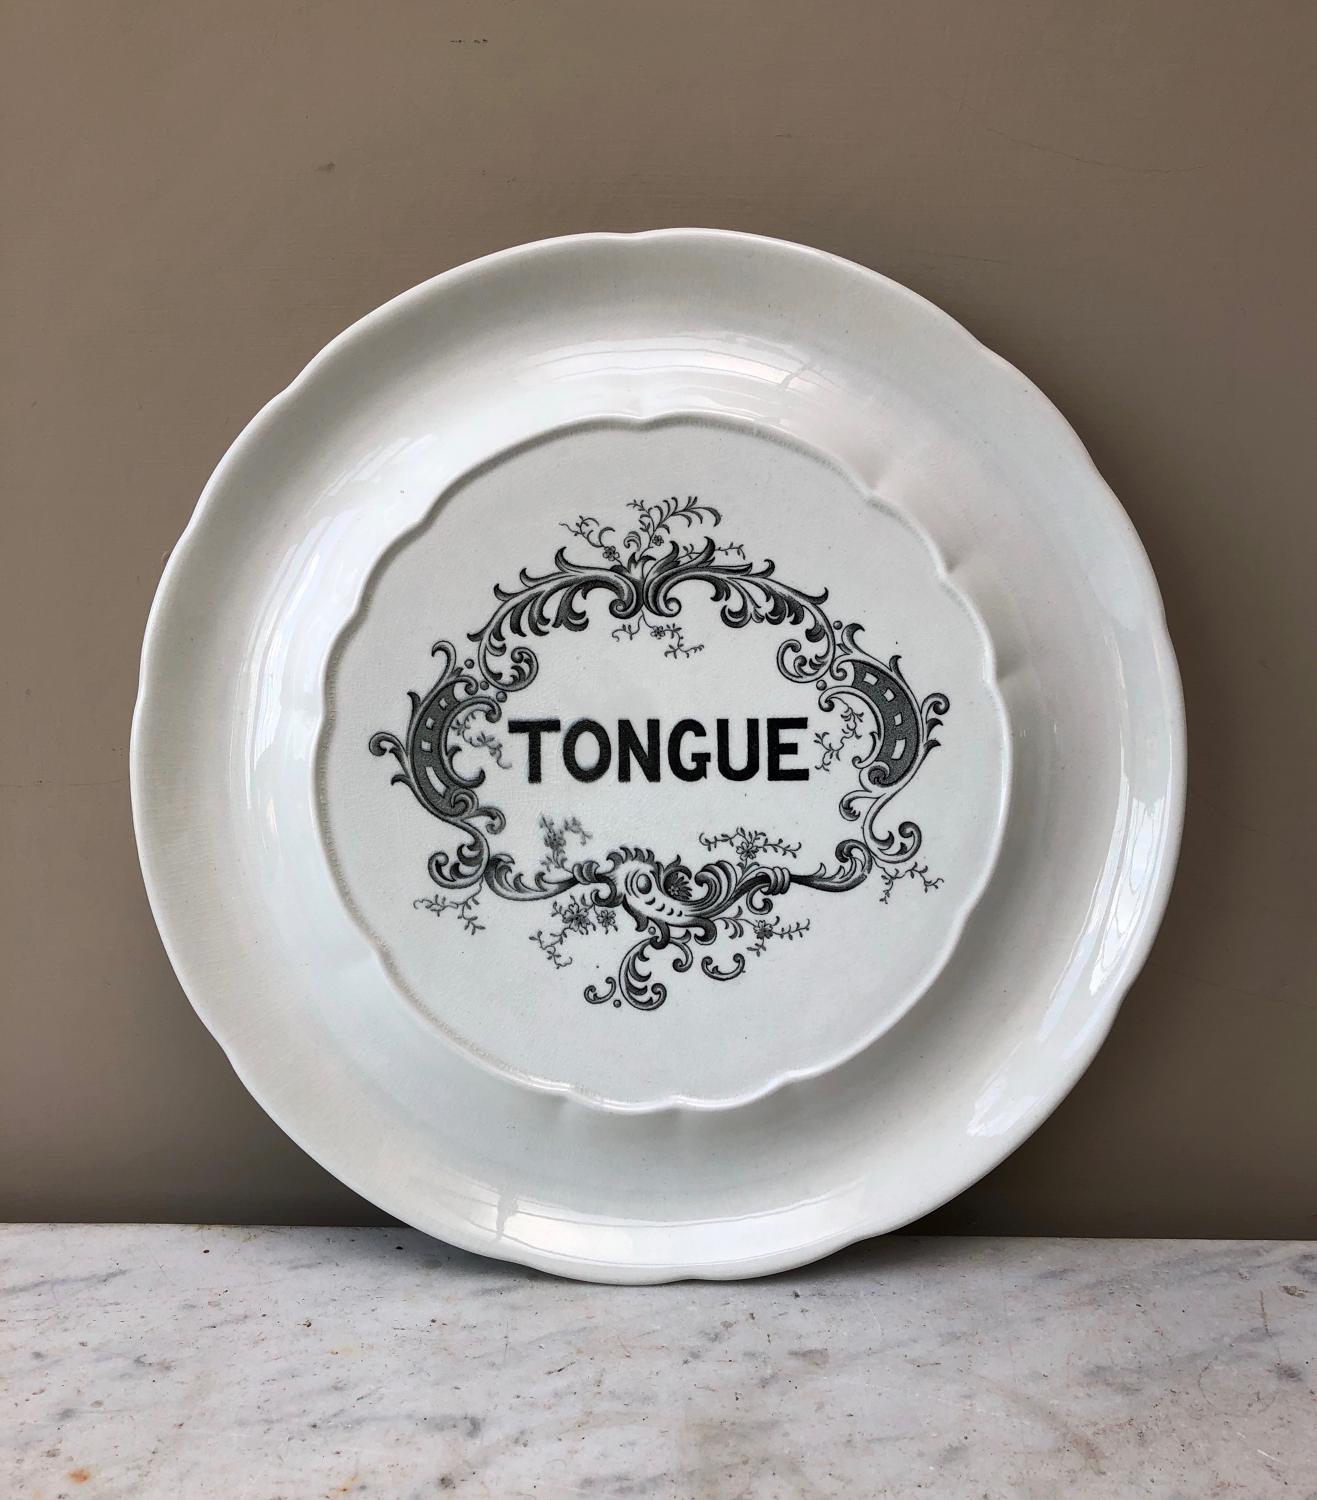 Edwardian Tongue Display Plate